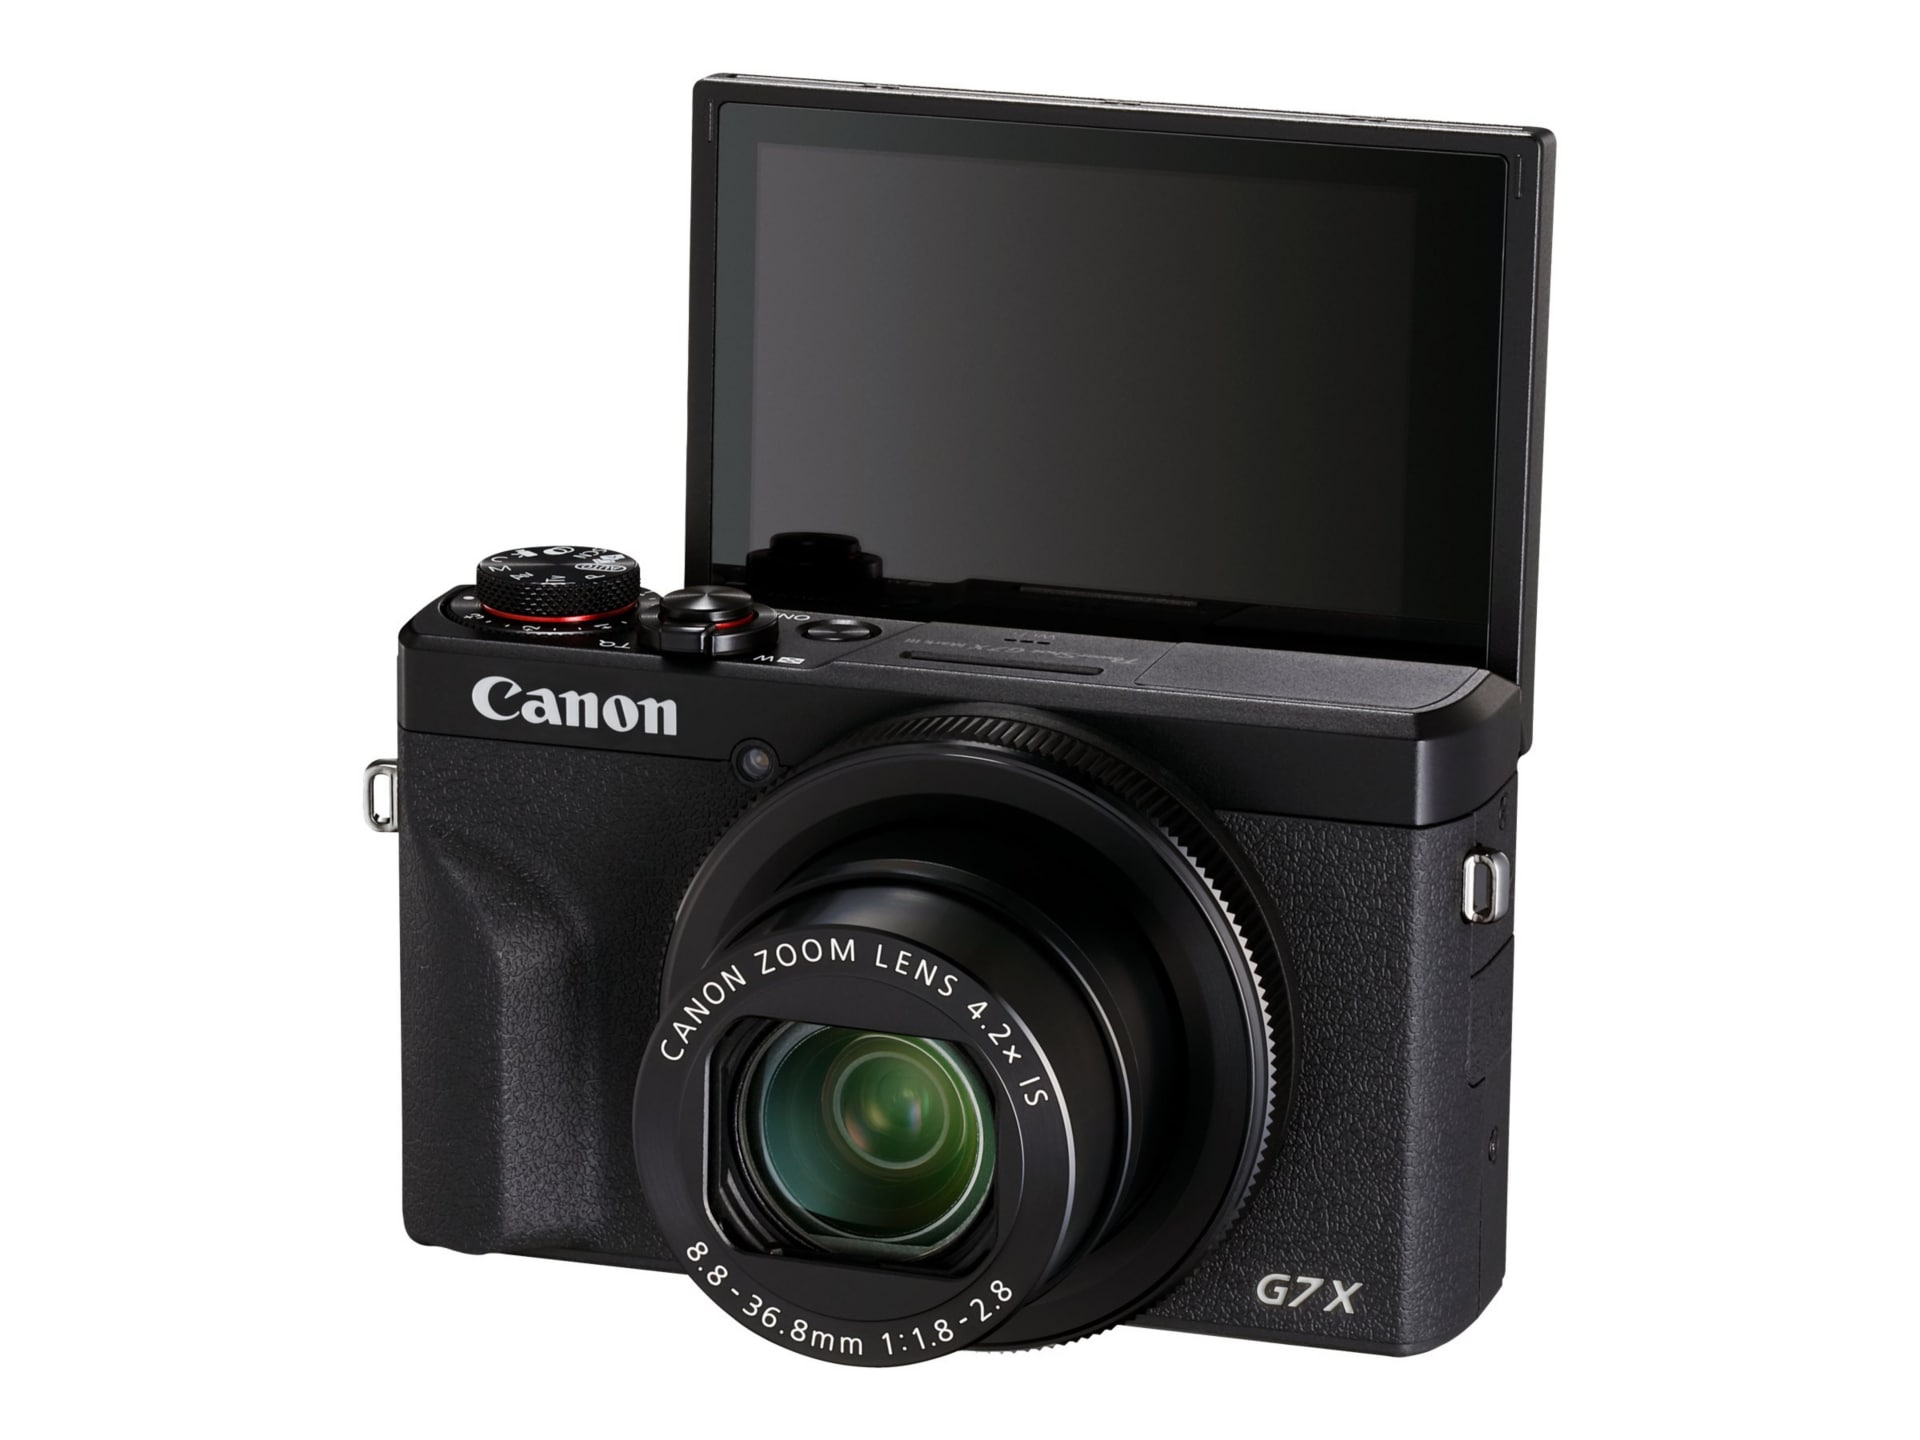 Canon PowerShot G7 X Mark III - digital camera - 3637C001 - Cameras -  CDW.com